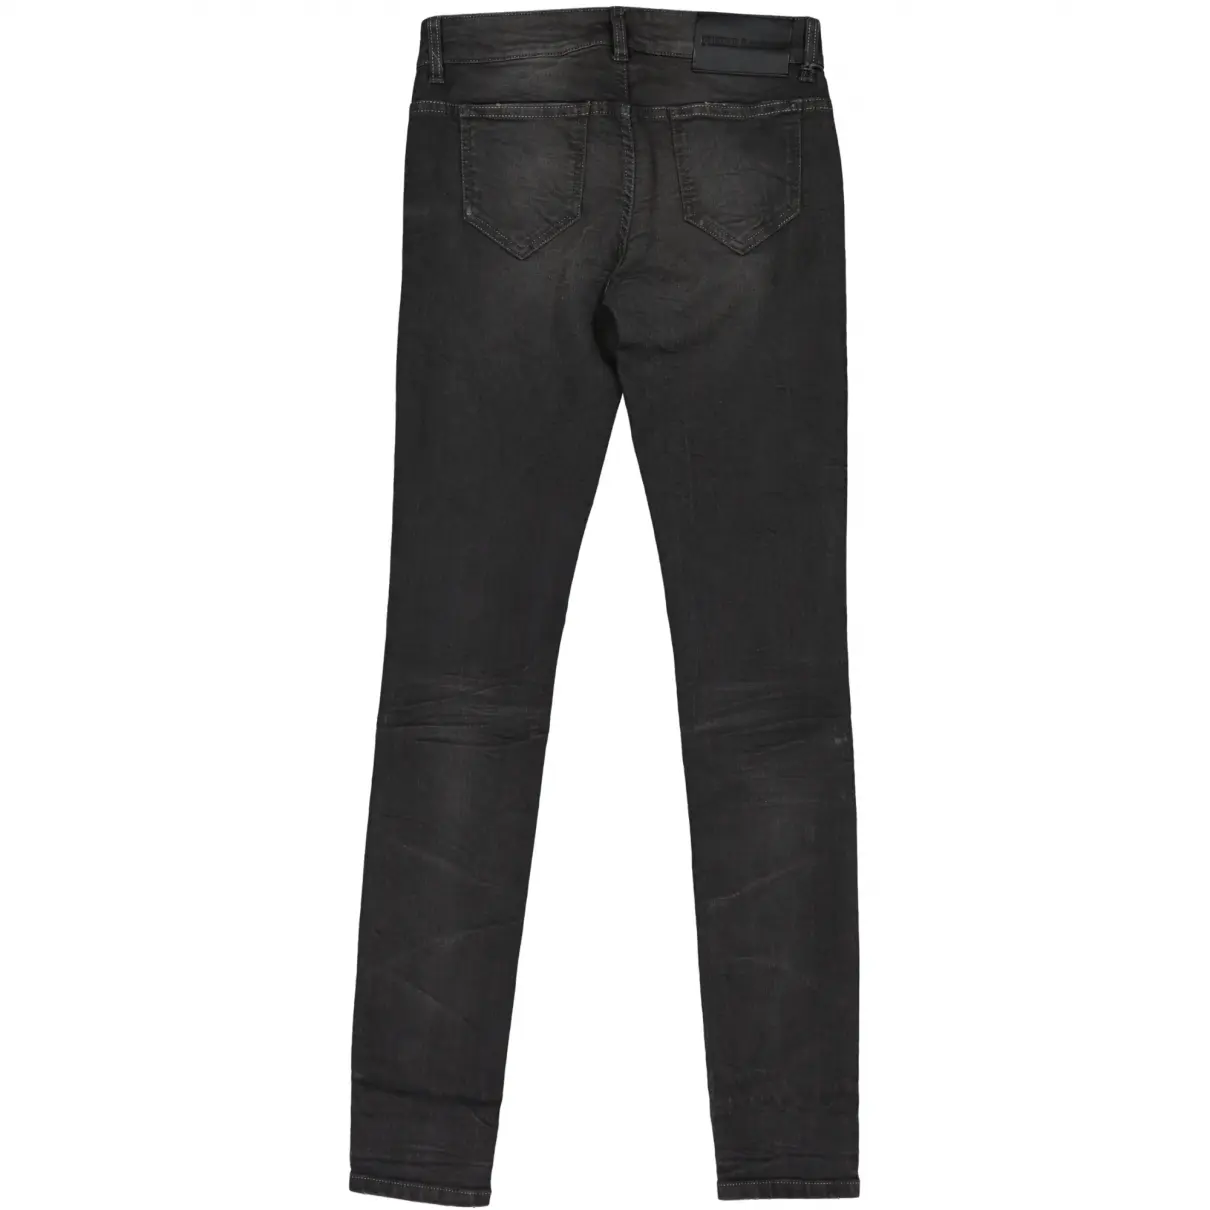 Balmain Slim jeans for sale - Vintage